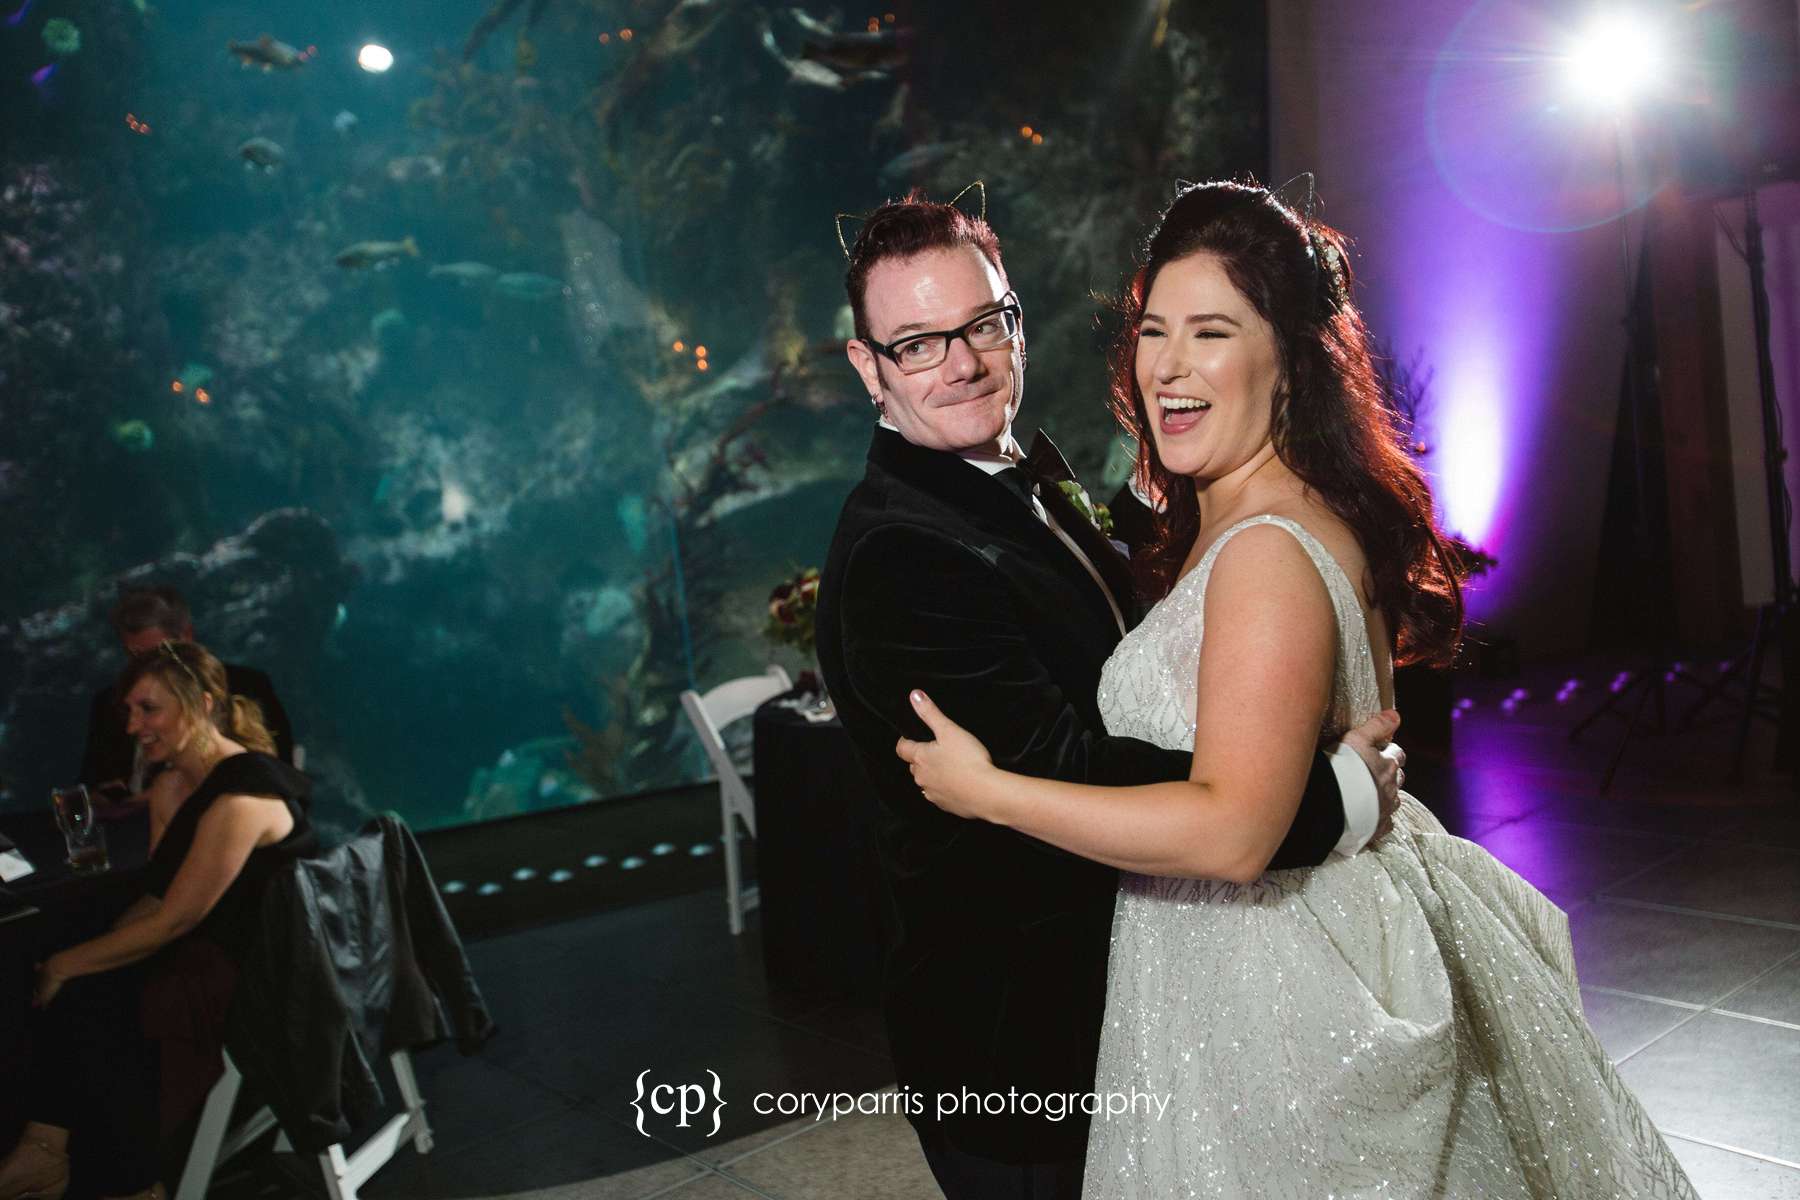 Dancing at Seattle Aquarium wedding reception